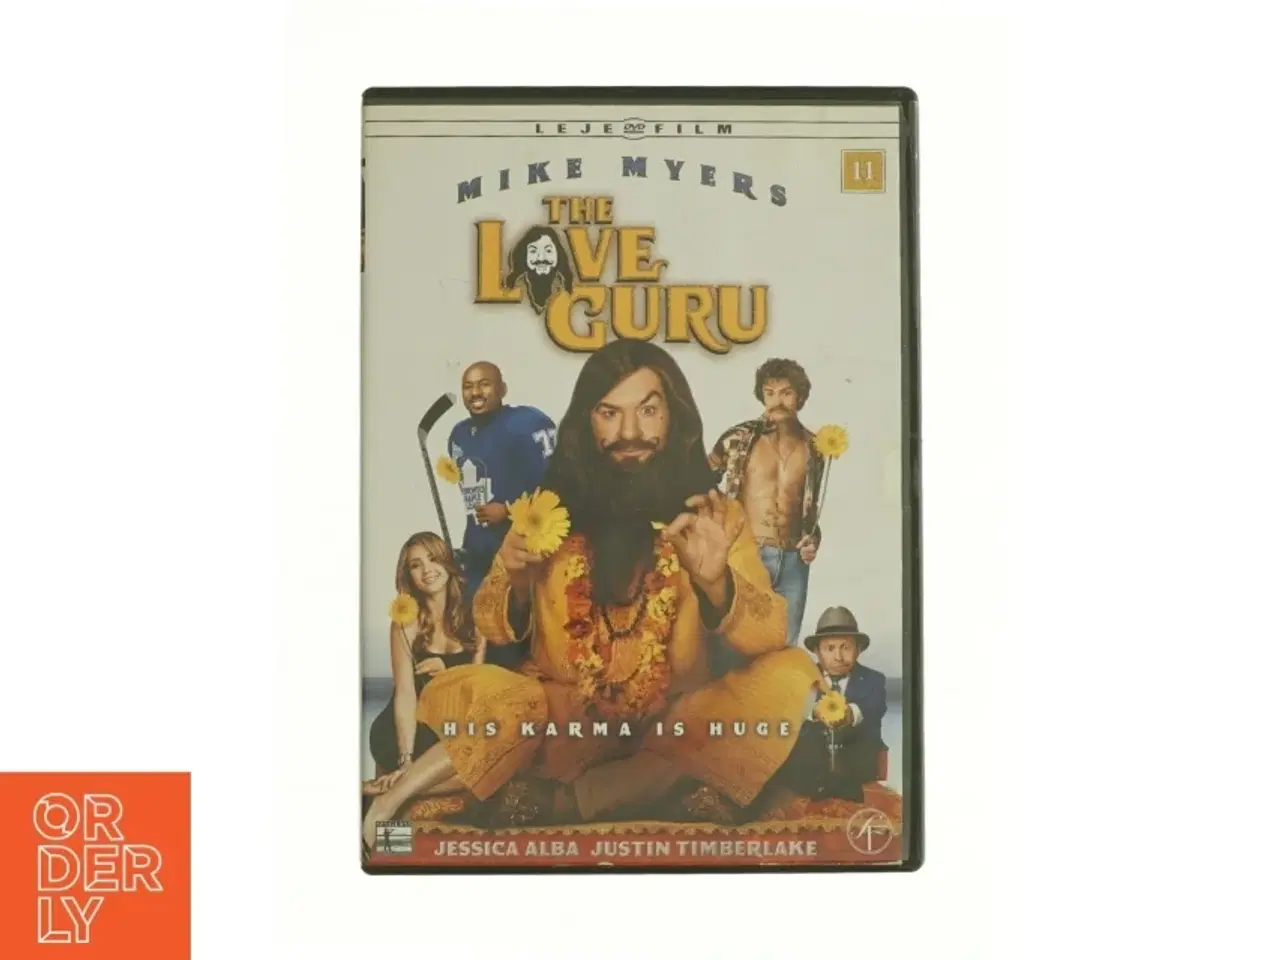 Billede 1 - The love guru fra dvd